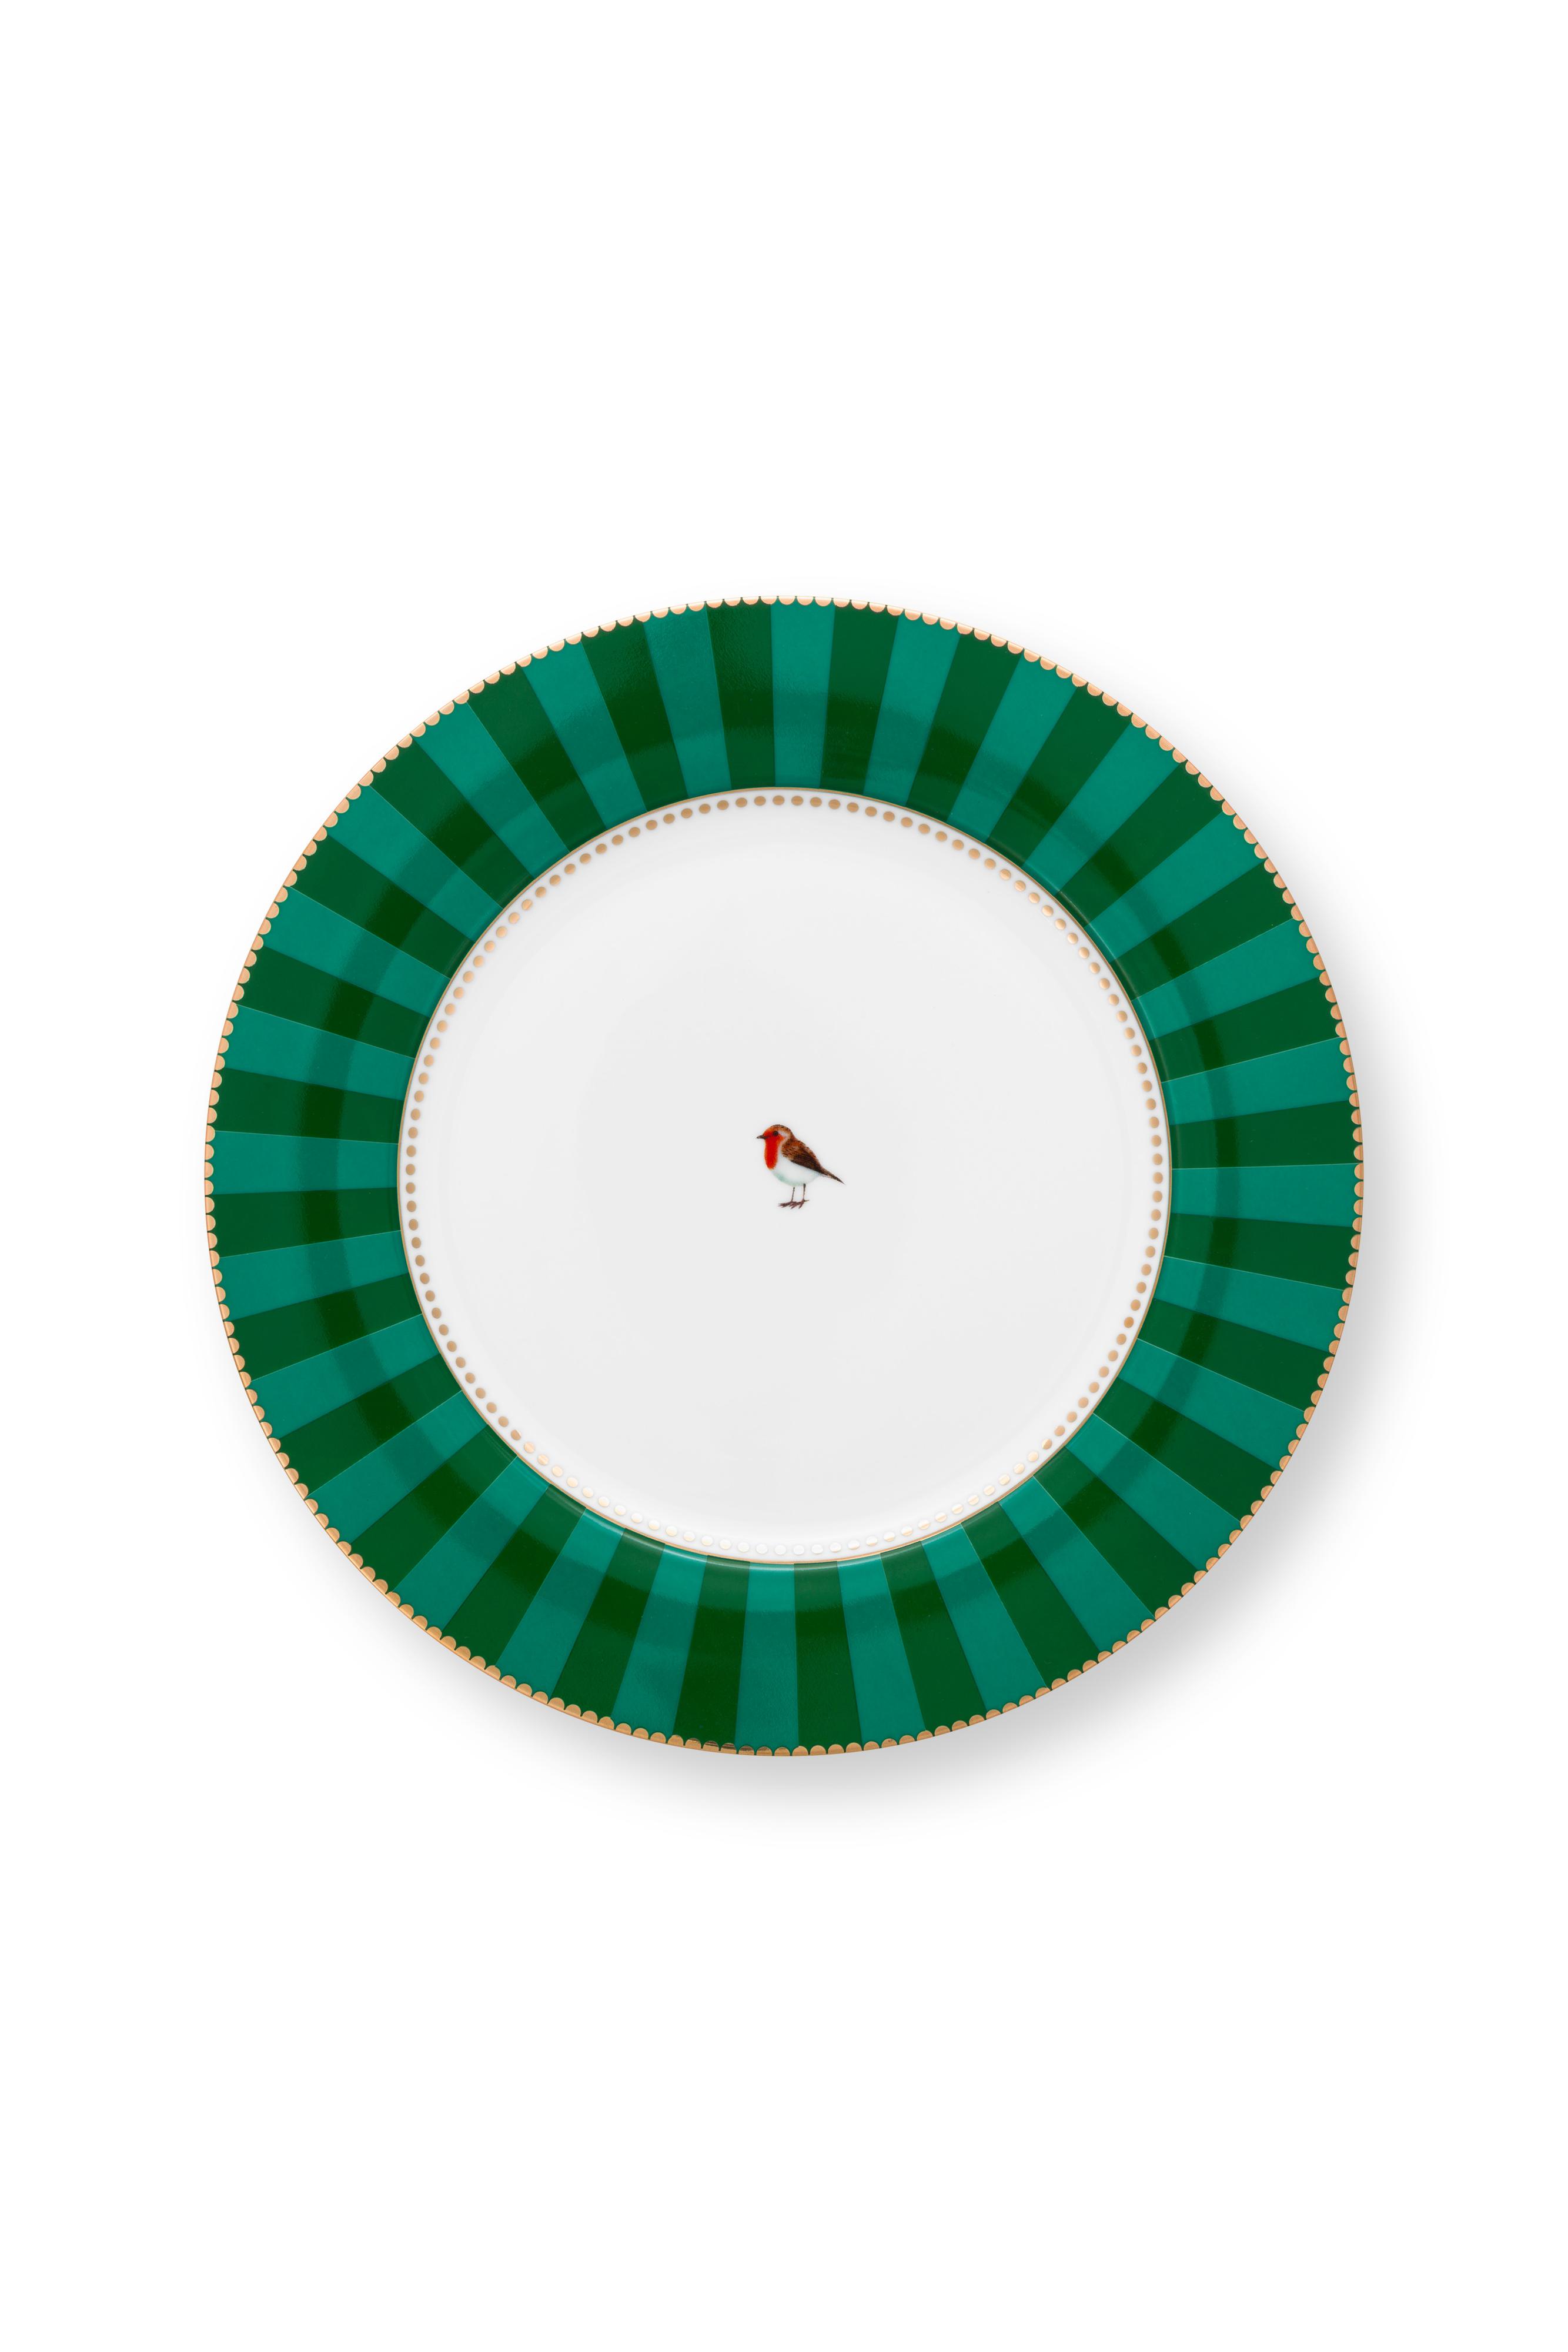 Plate Love Birds Stripes Emerald-green 26.5cm Gift